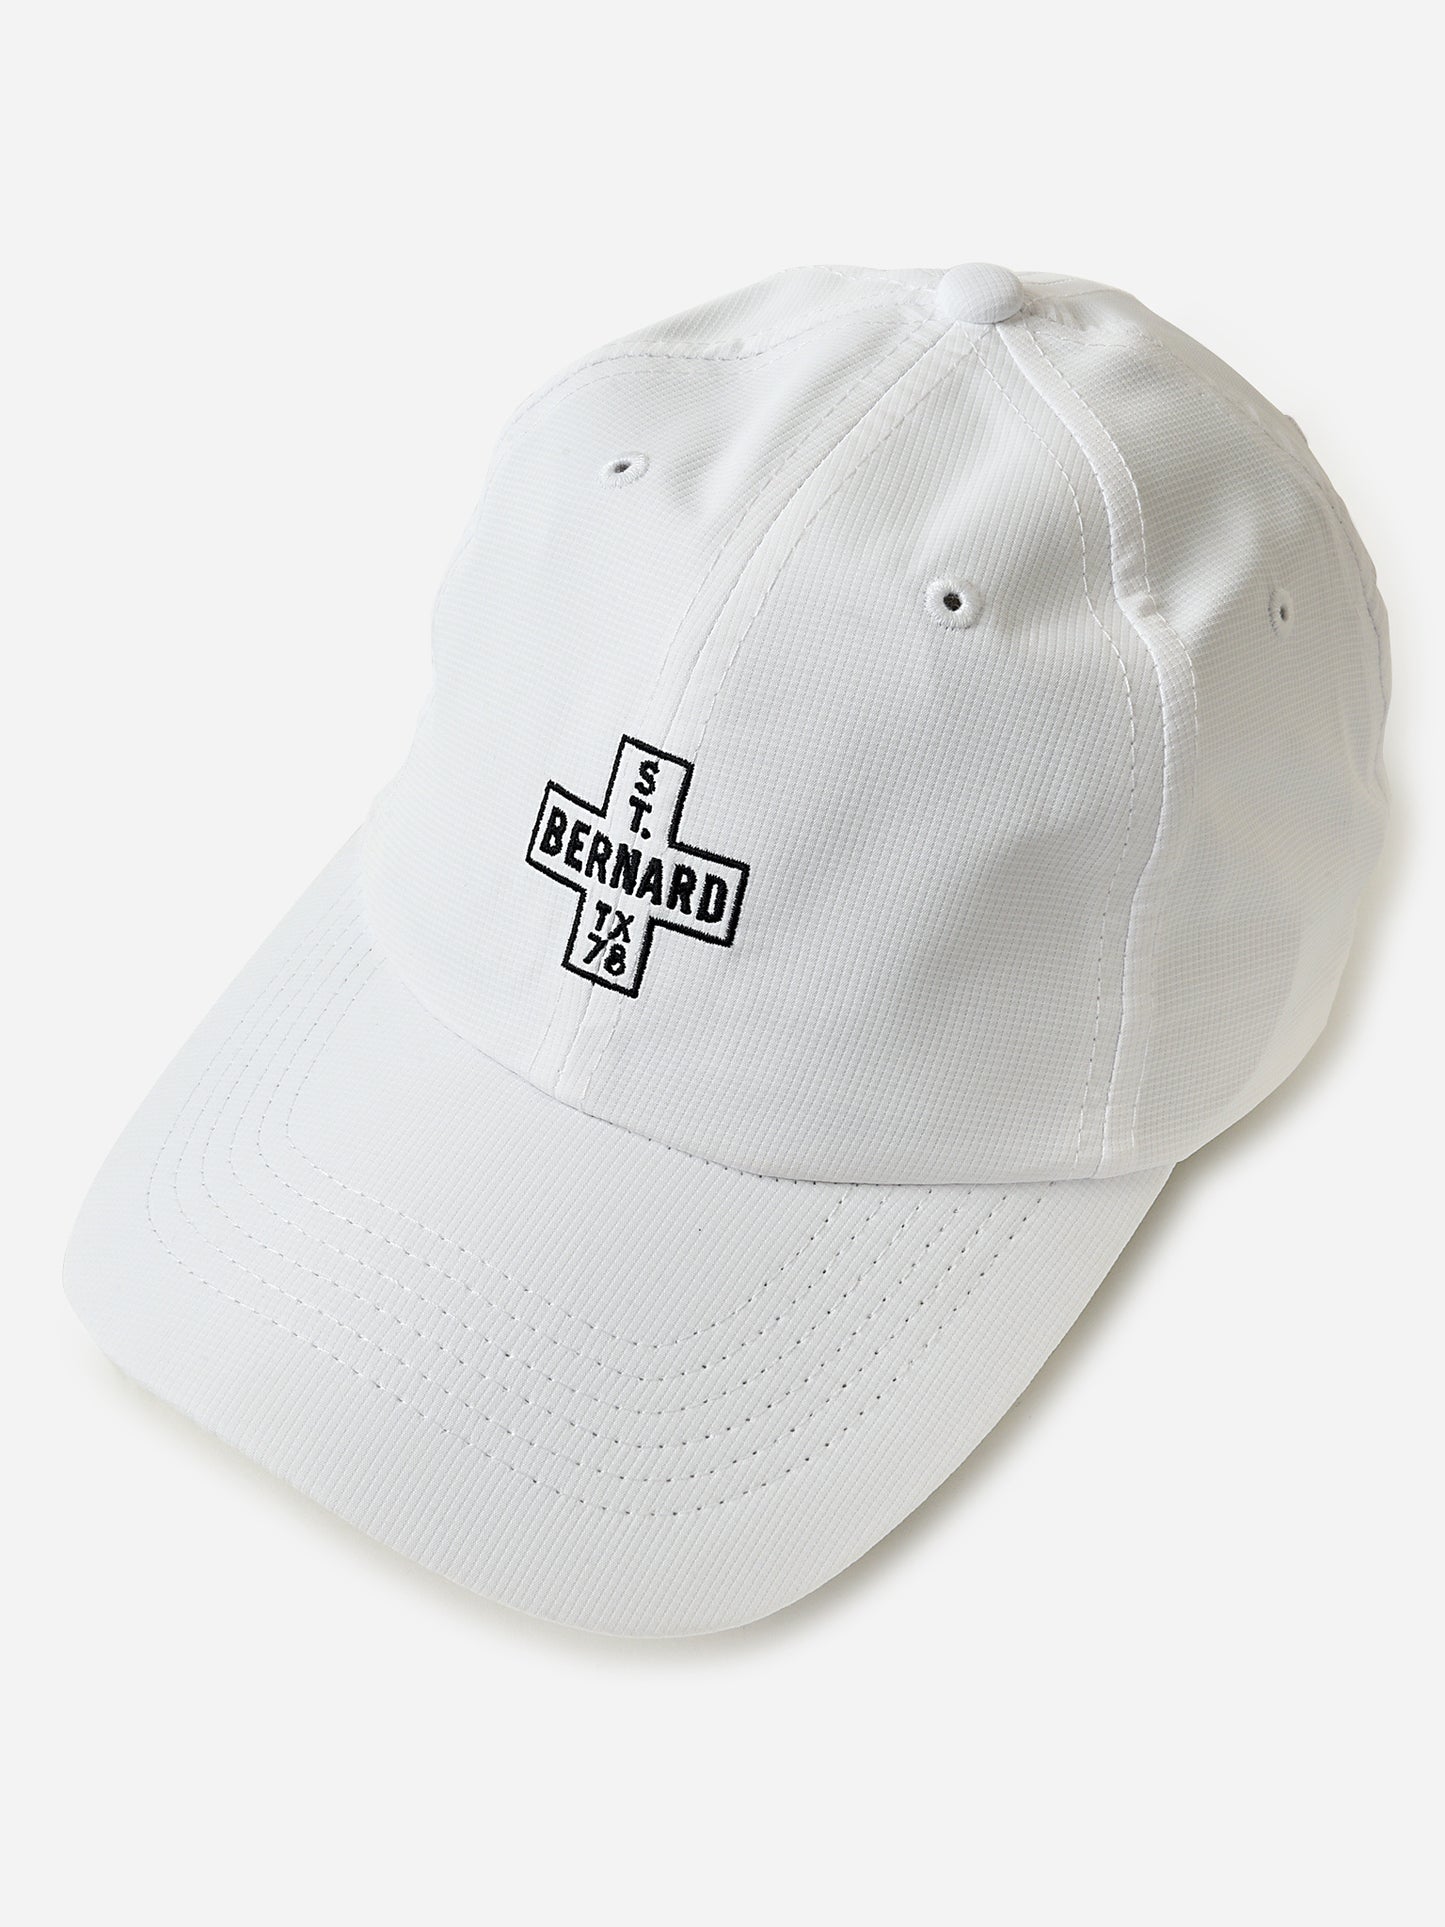 Saint Bernard Cross Logo Performance Hat